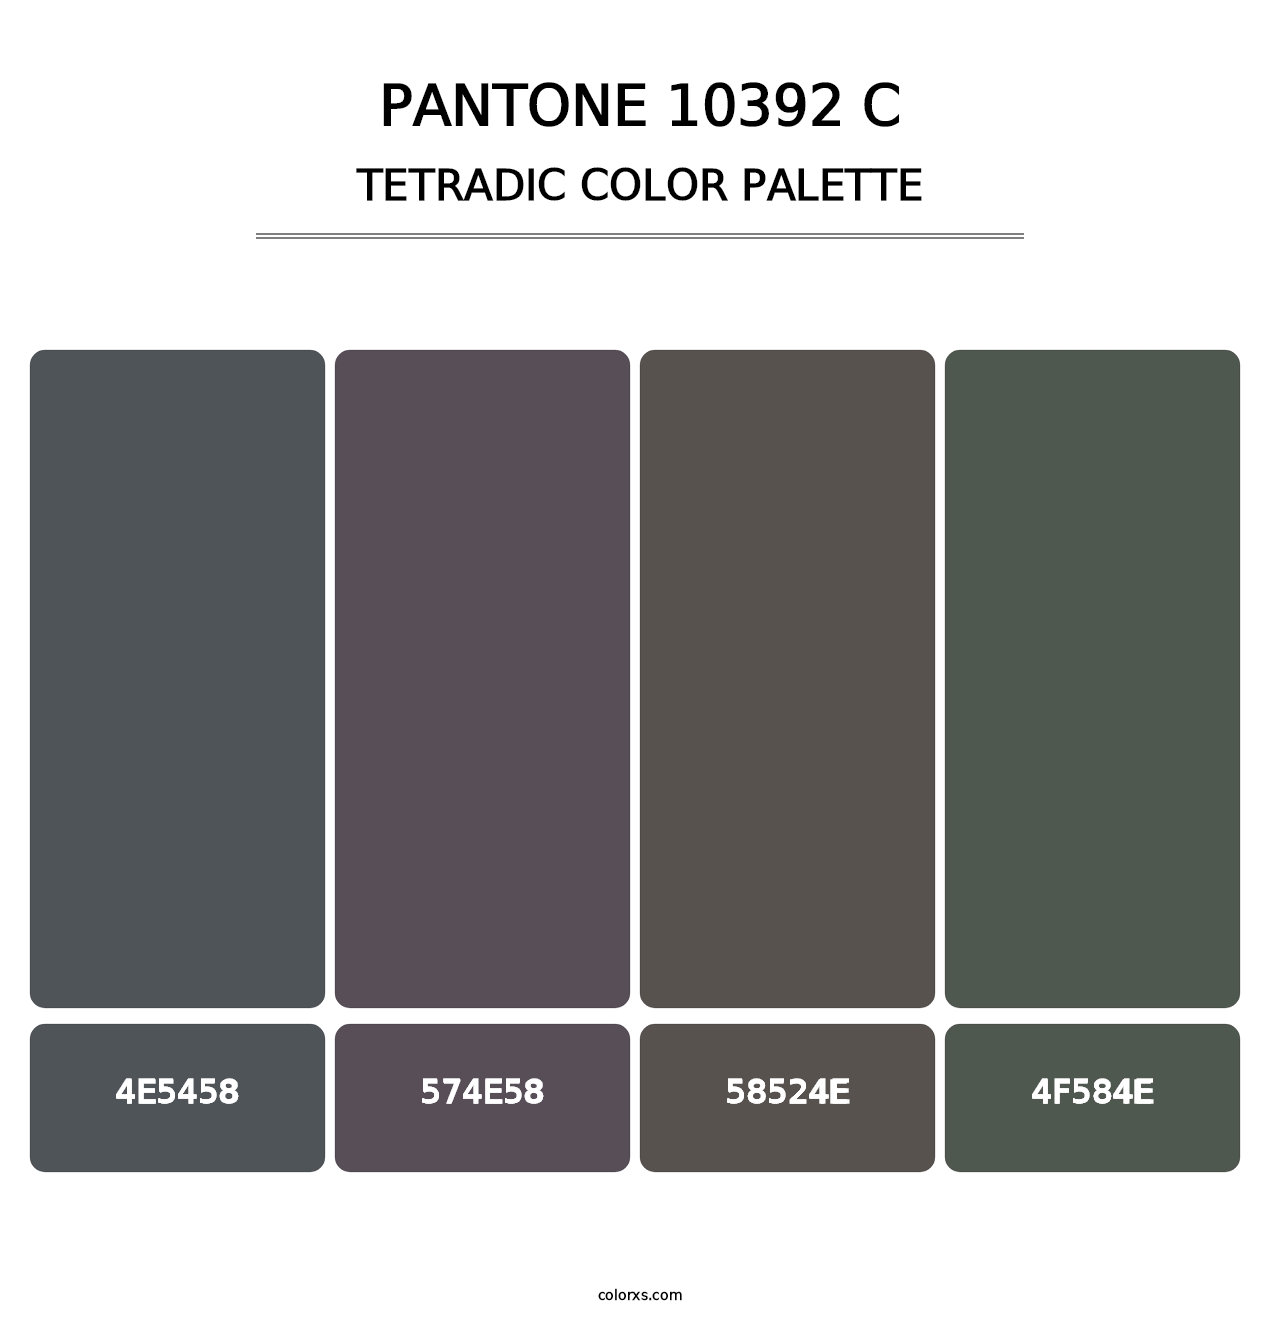 PANTONE 10392 C - Tetradic Color Palette